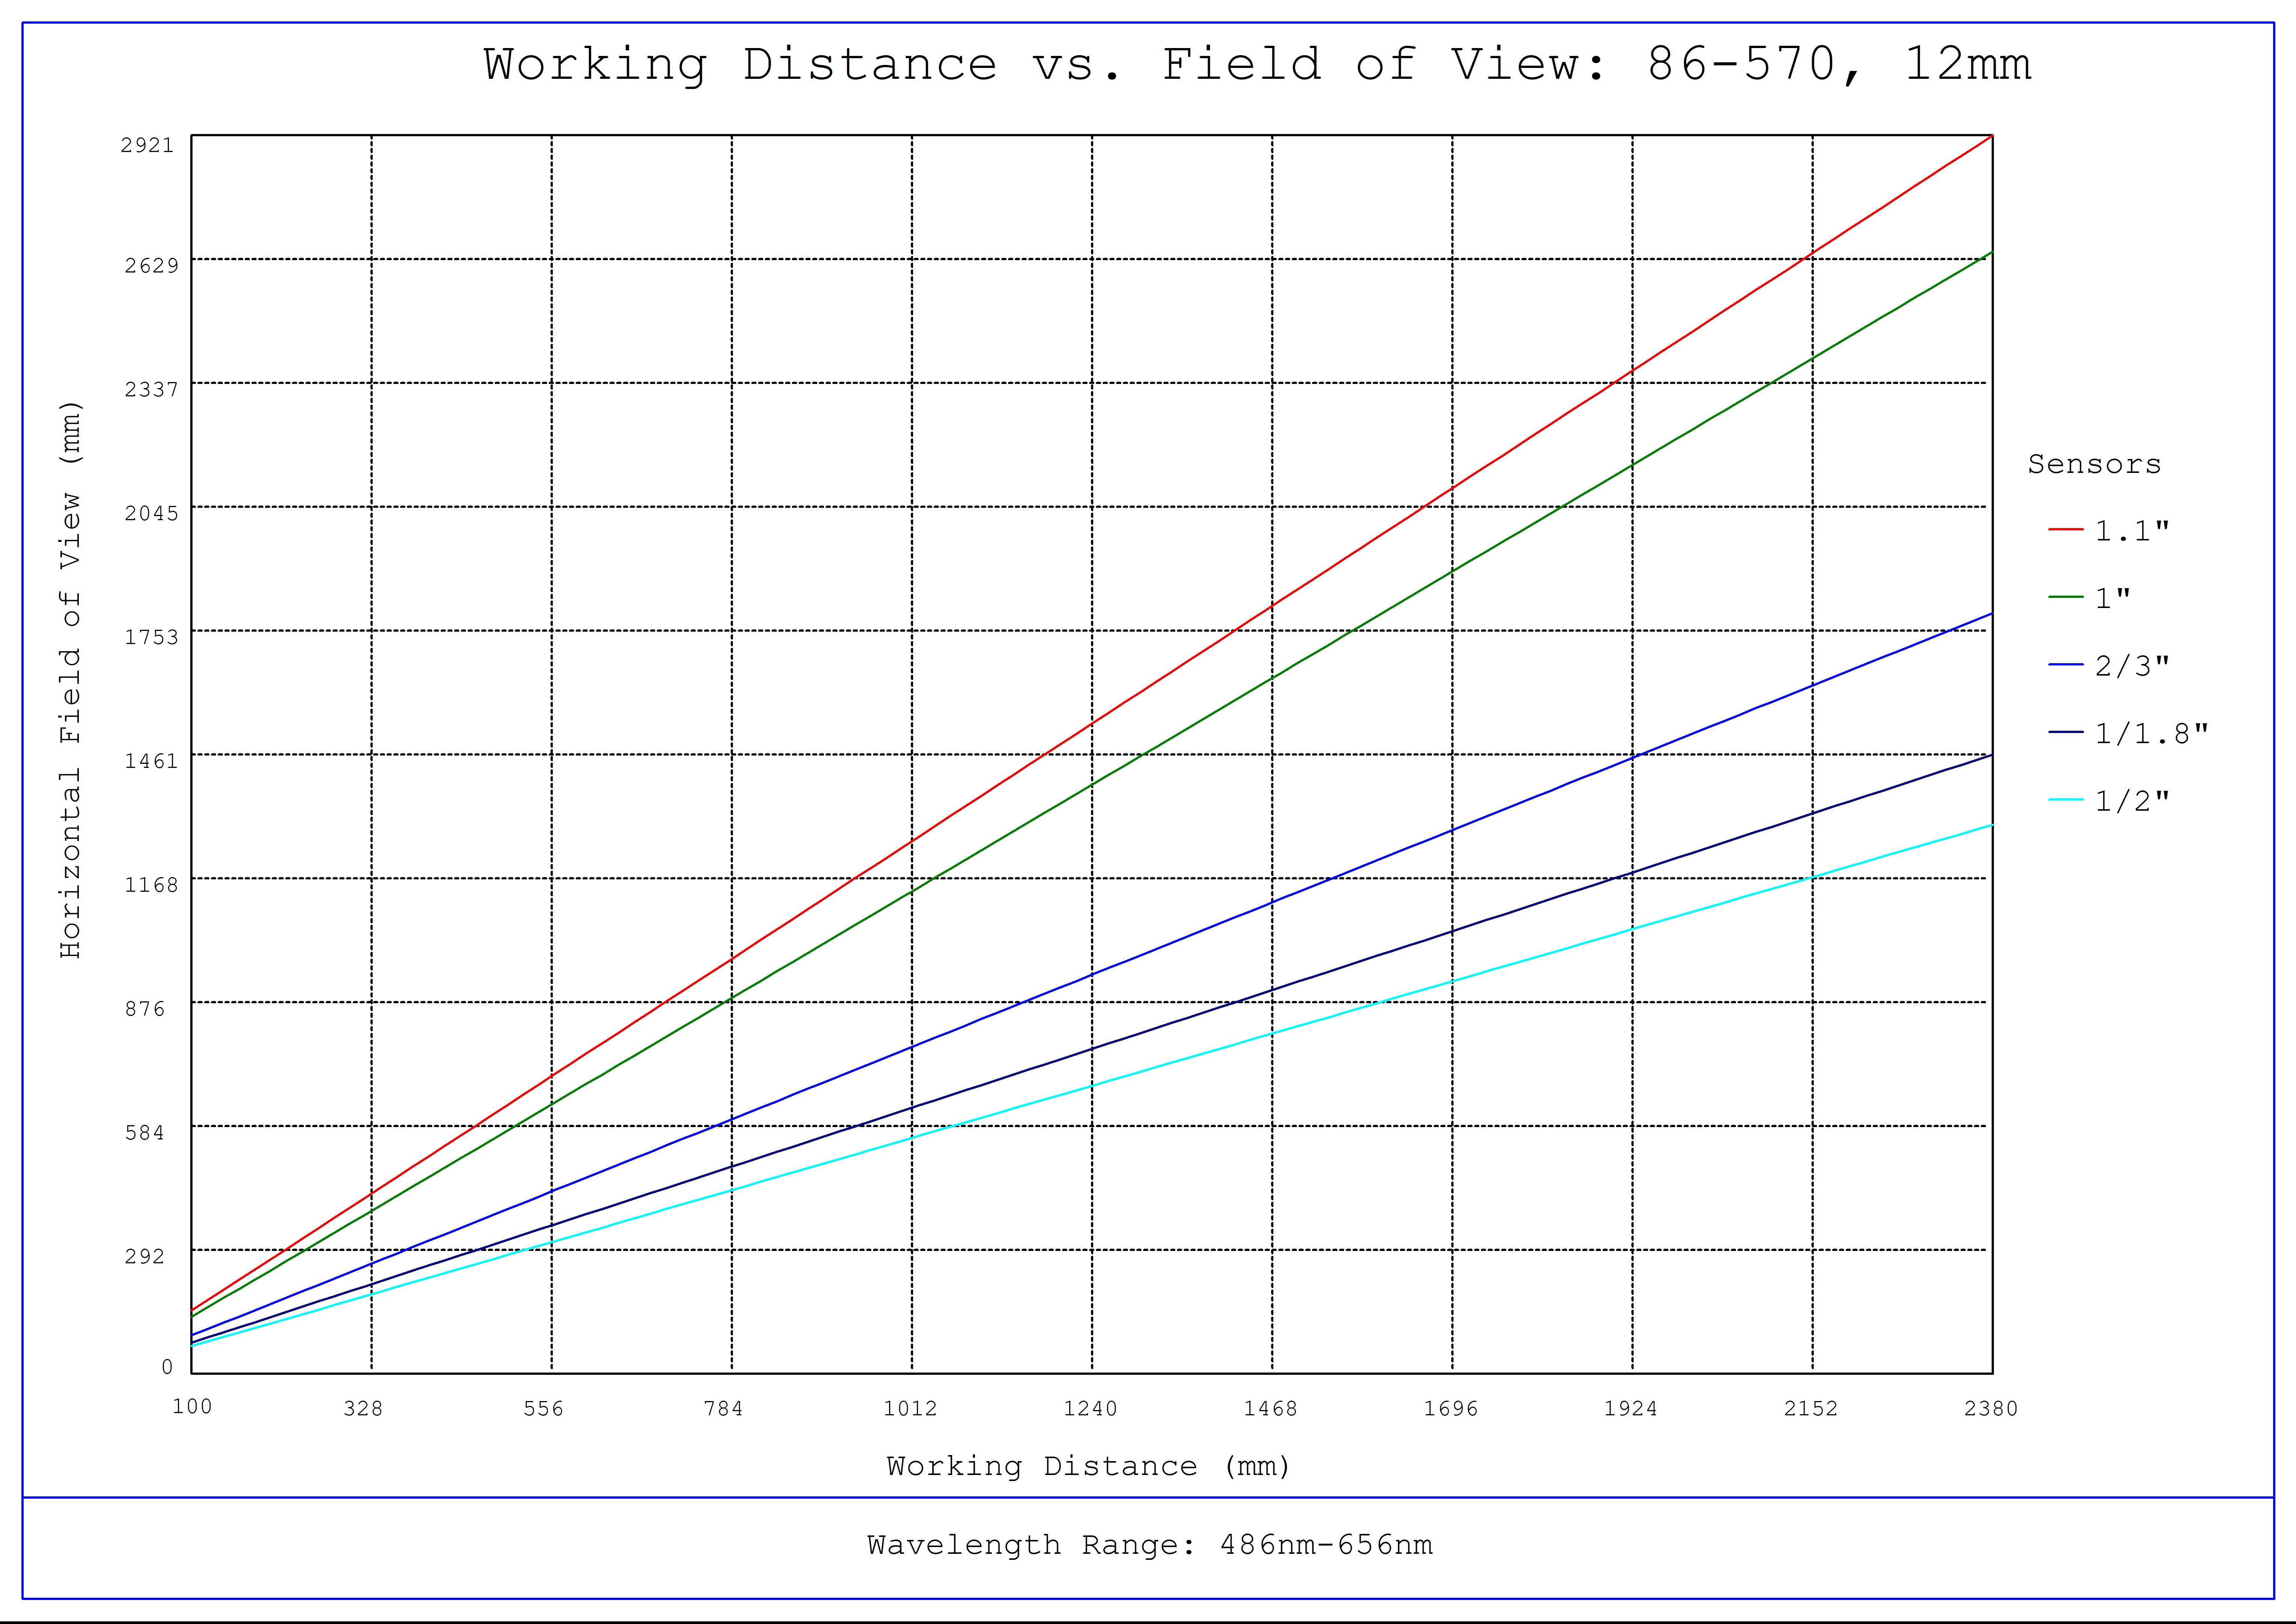 #86-570, 12mm Focal Length, HP Series Fixed Focal Length Lens, Working Distance versus Field of View Plot